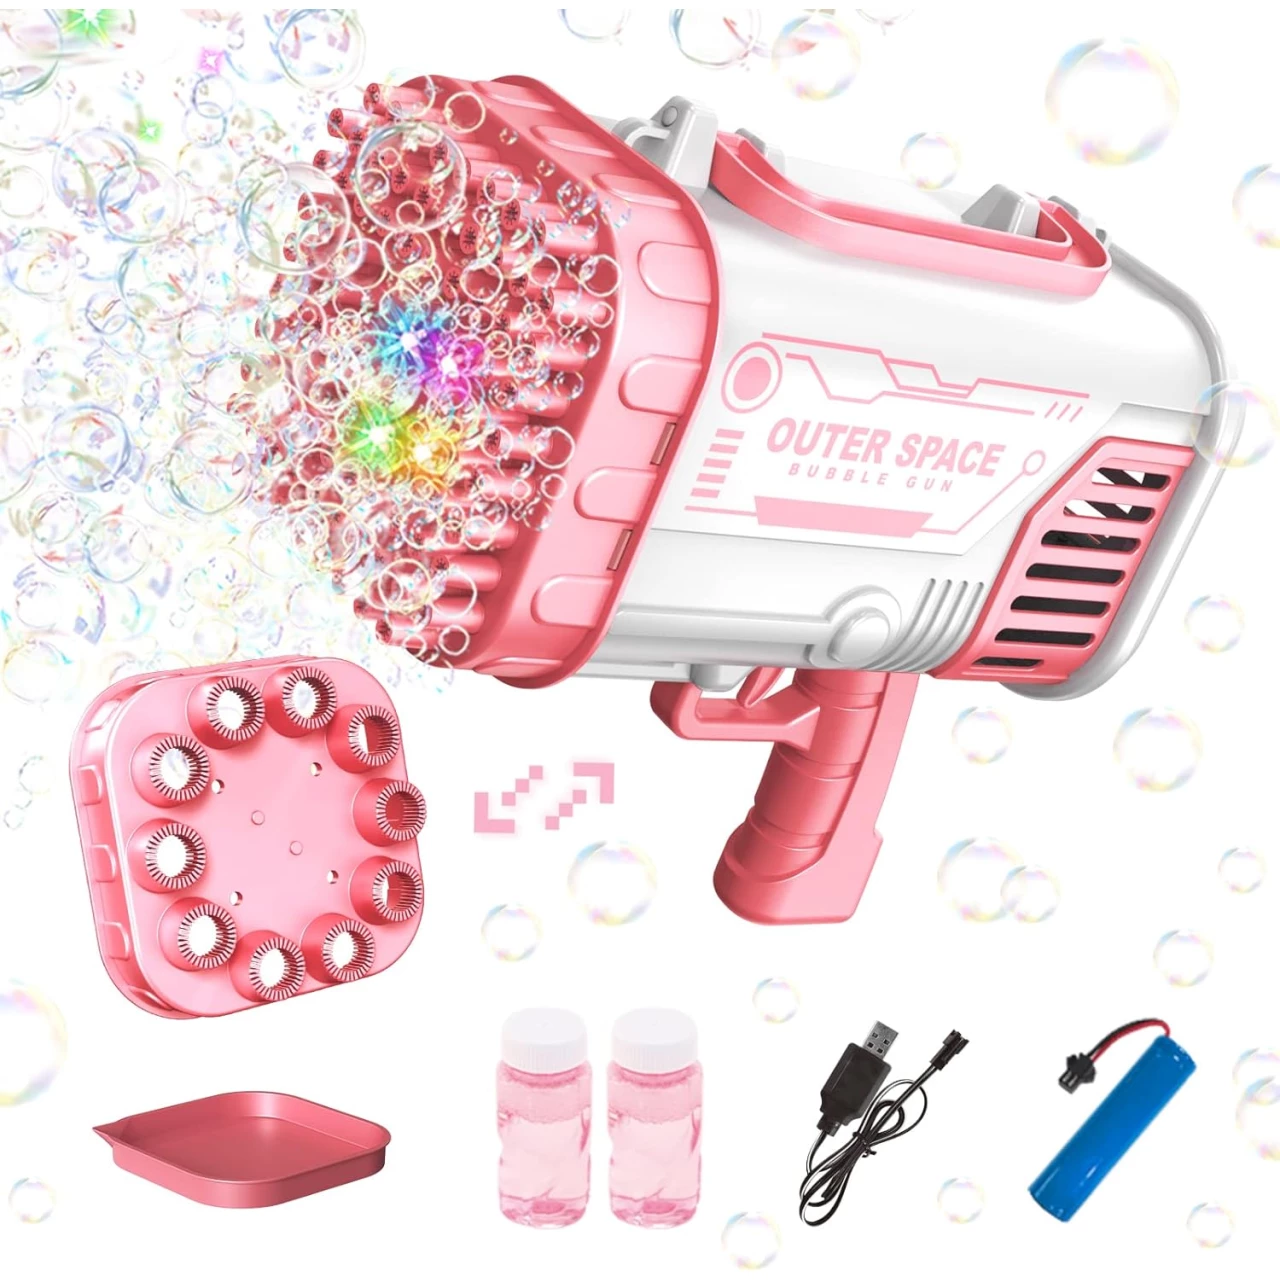 Double-Headed Bubble Machine Gun, Switchable 80-Hole/ 10-Hole Rocket Bubble Gun with LED Lights (Pink)